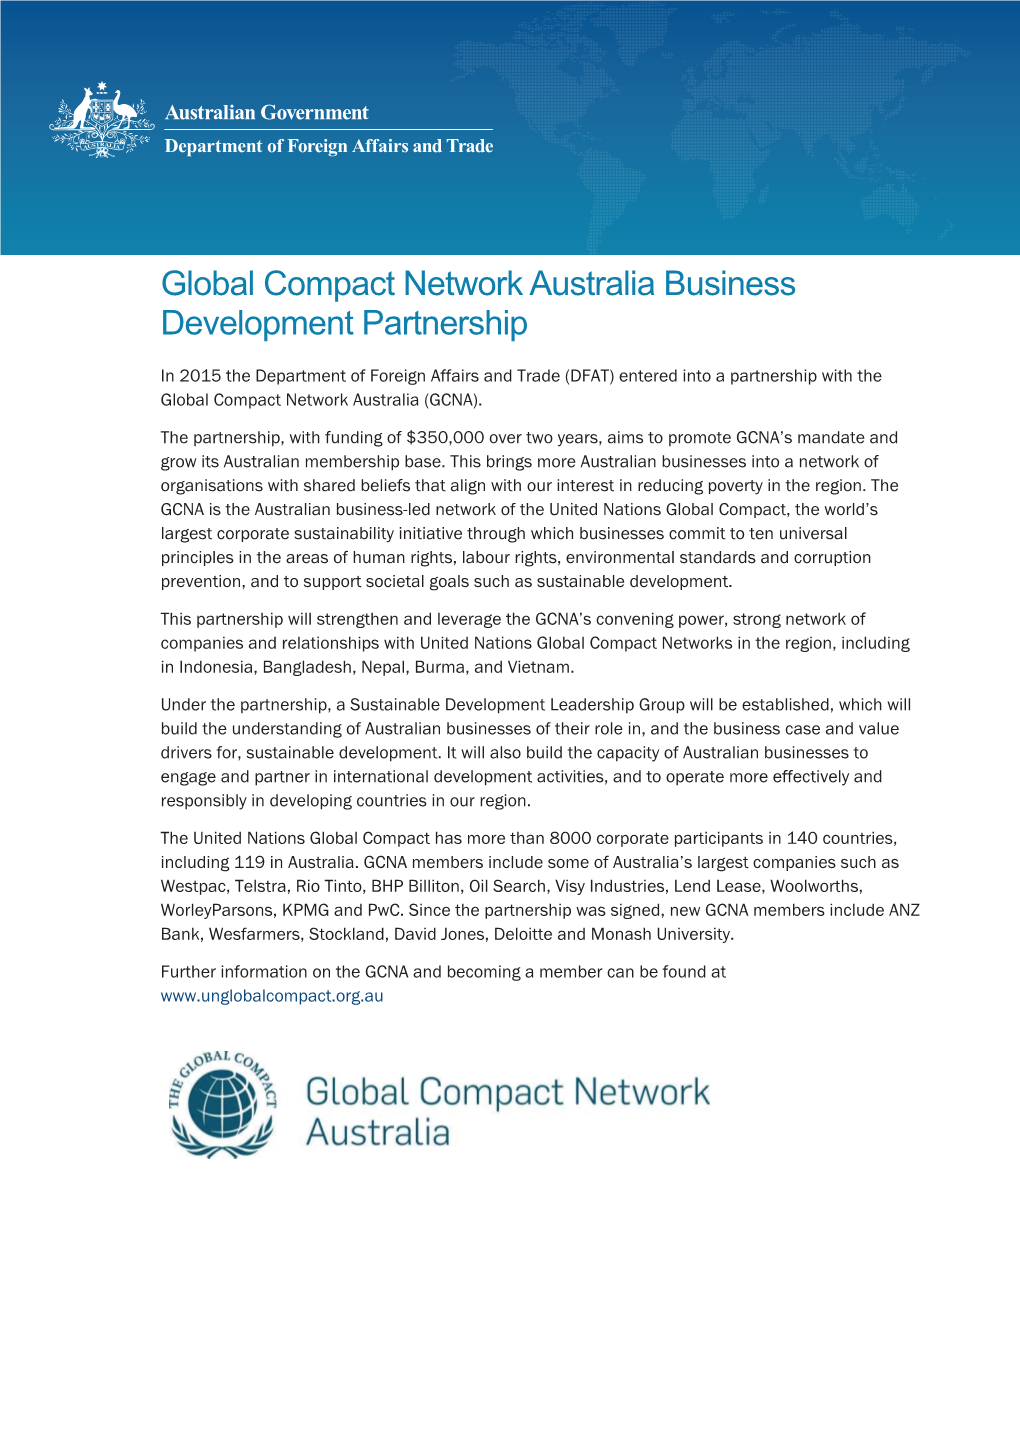 Global Compact Network Australia Business Development Partnership